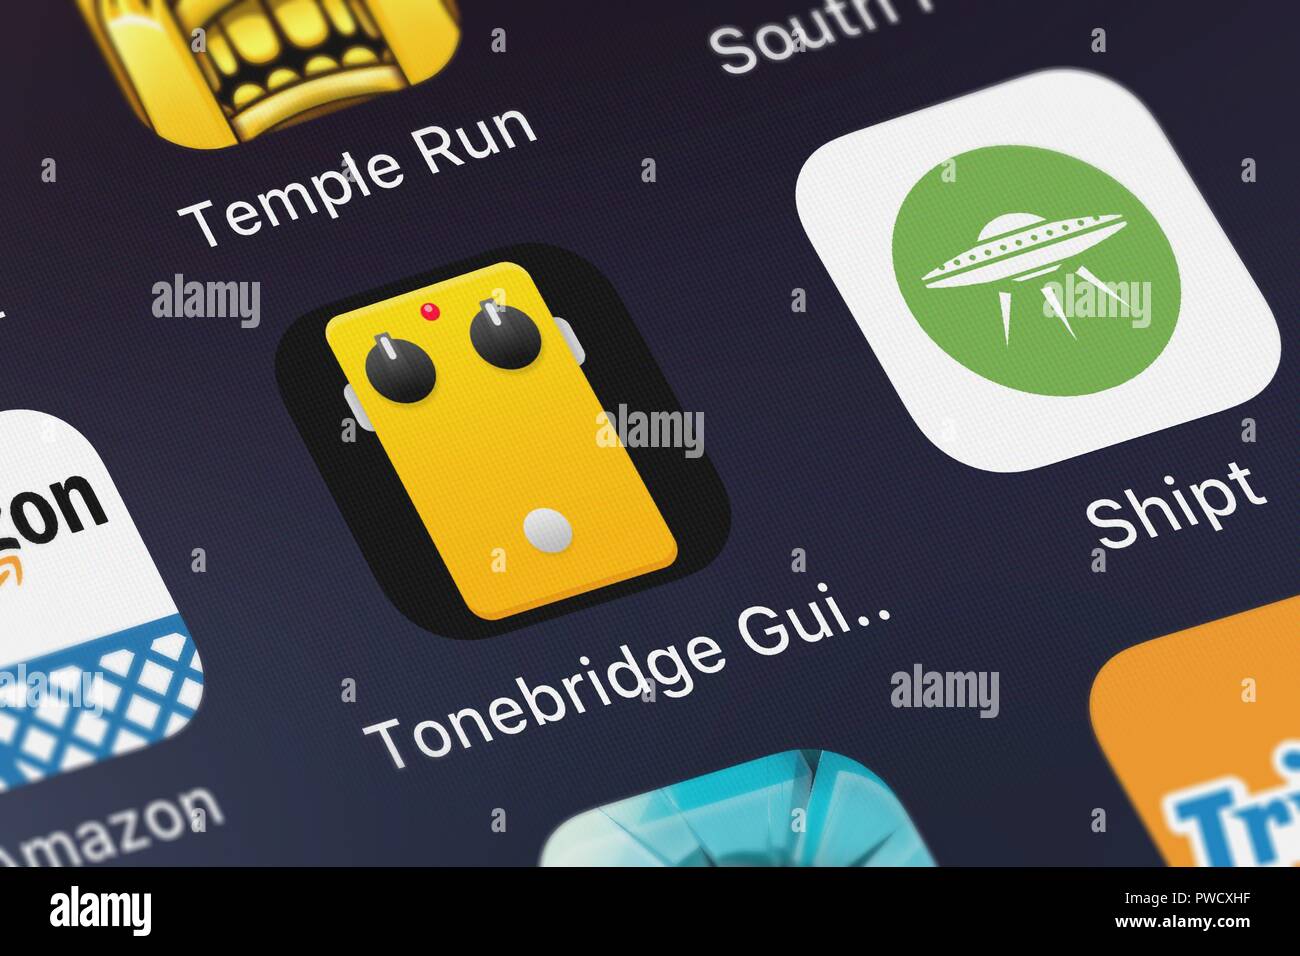 Temple Run 2  iOS Icon Gallery